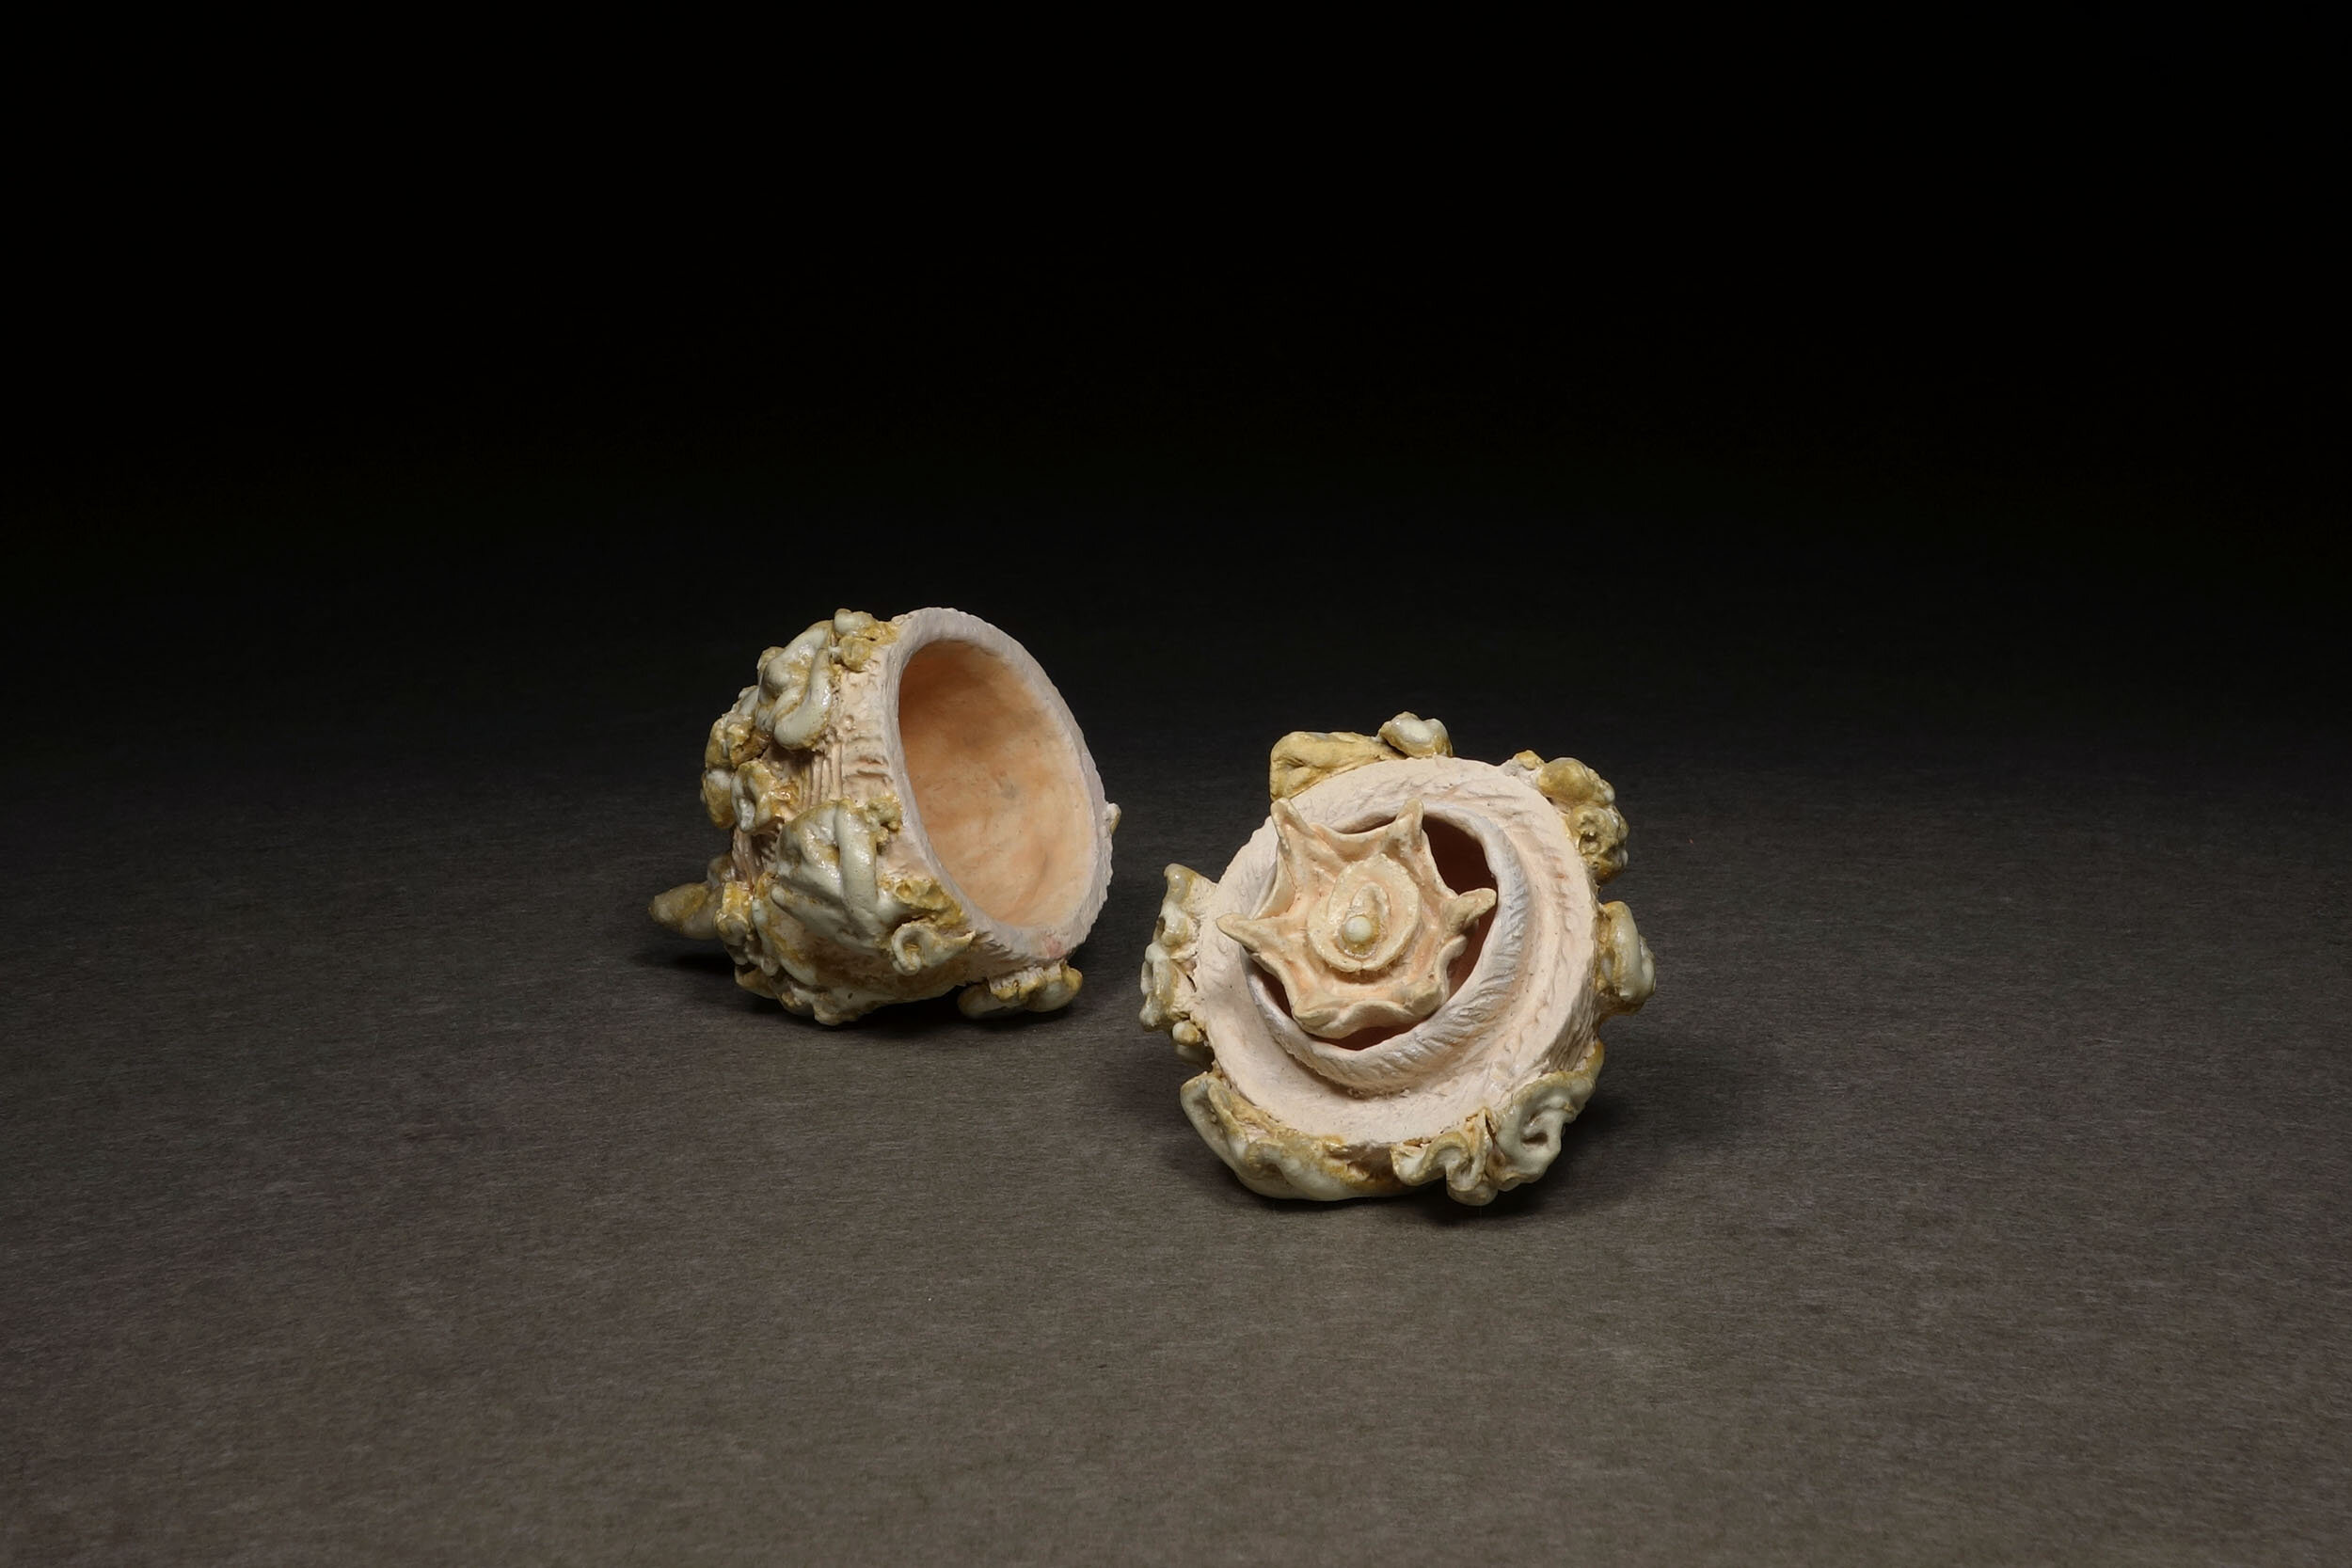   Fabergé Egg 3 , Ceramic Sculpture: 2015, glazed ceramic 